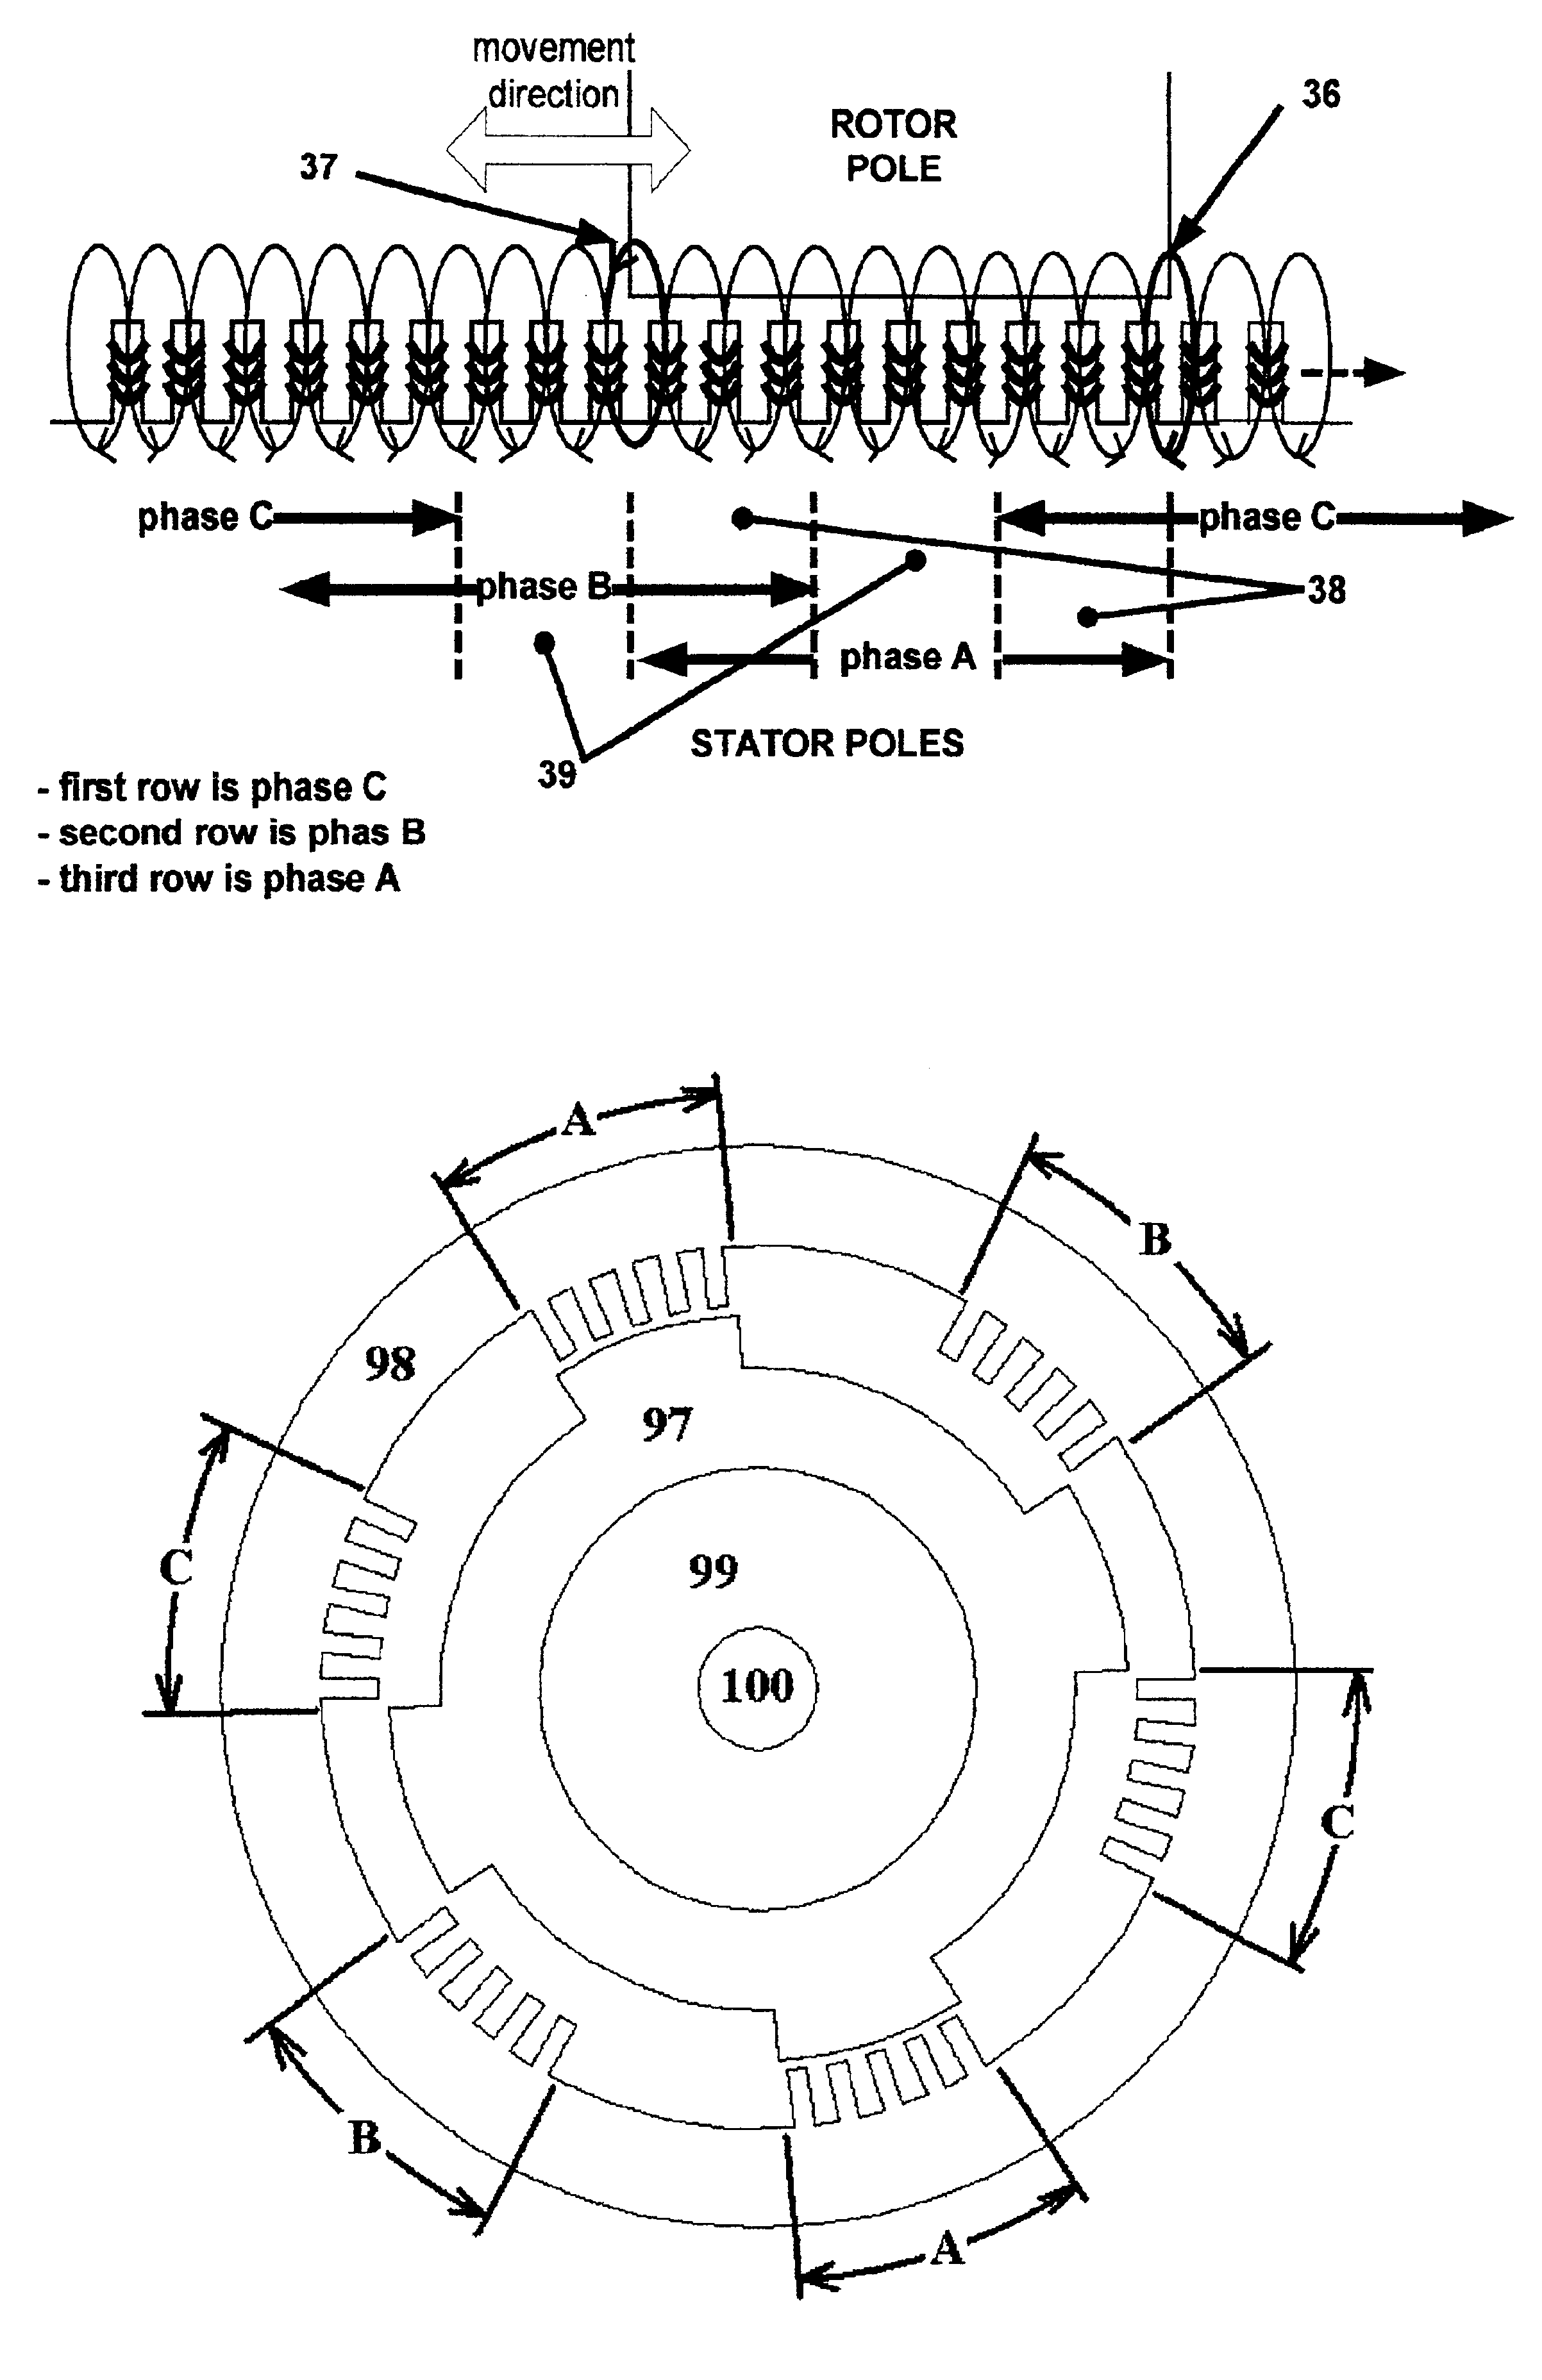 Multi-circular flux motor